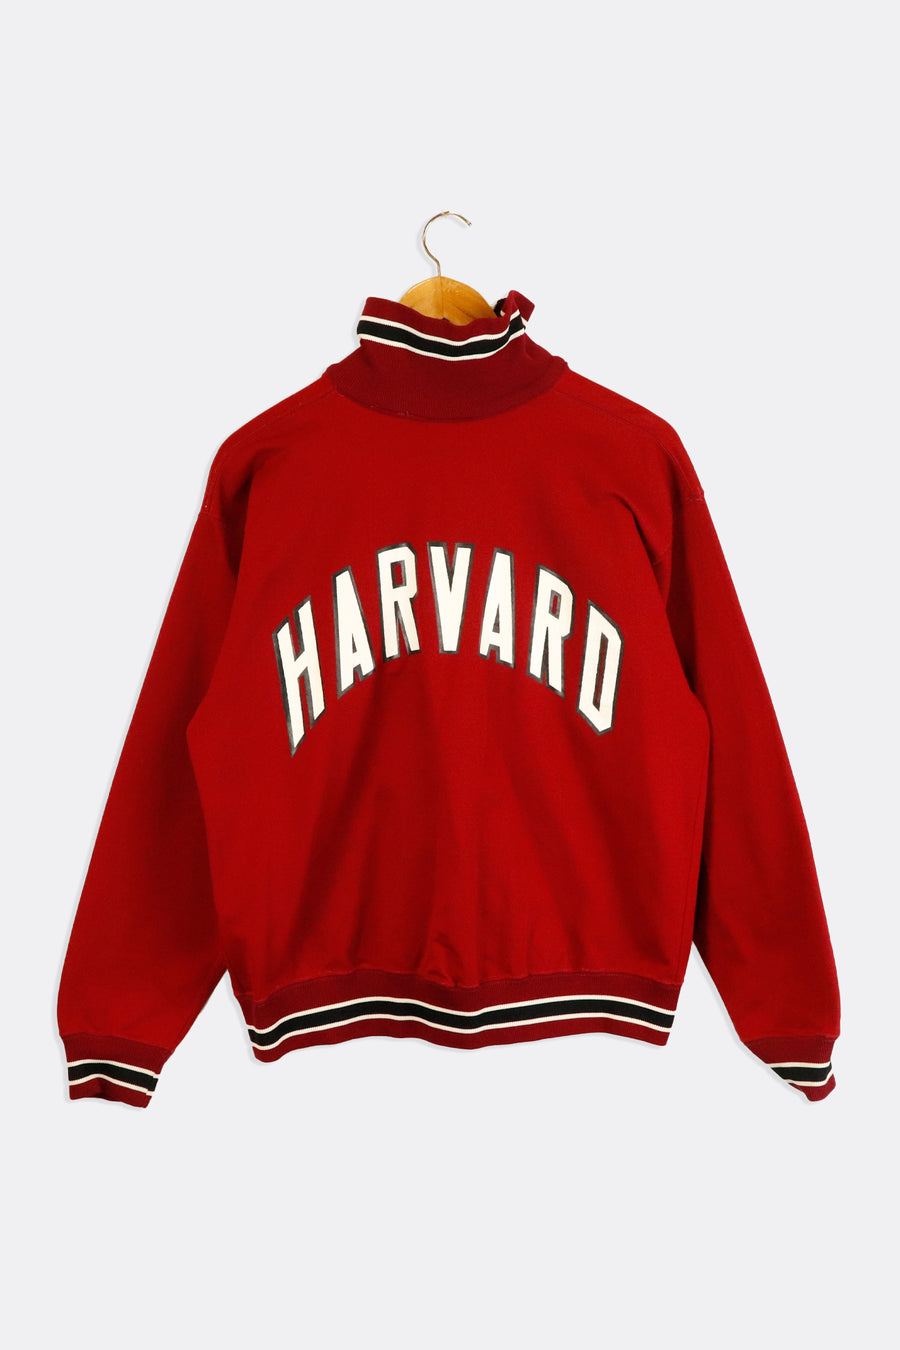 Vintage Harvard Full Zip Warm Up Veritas Vinyl Logo And Lettering Outerwear Sz L